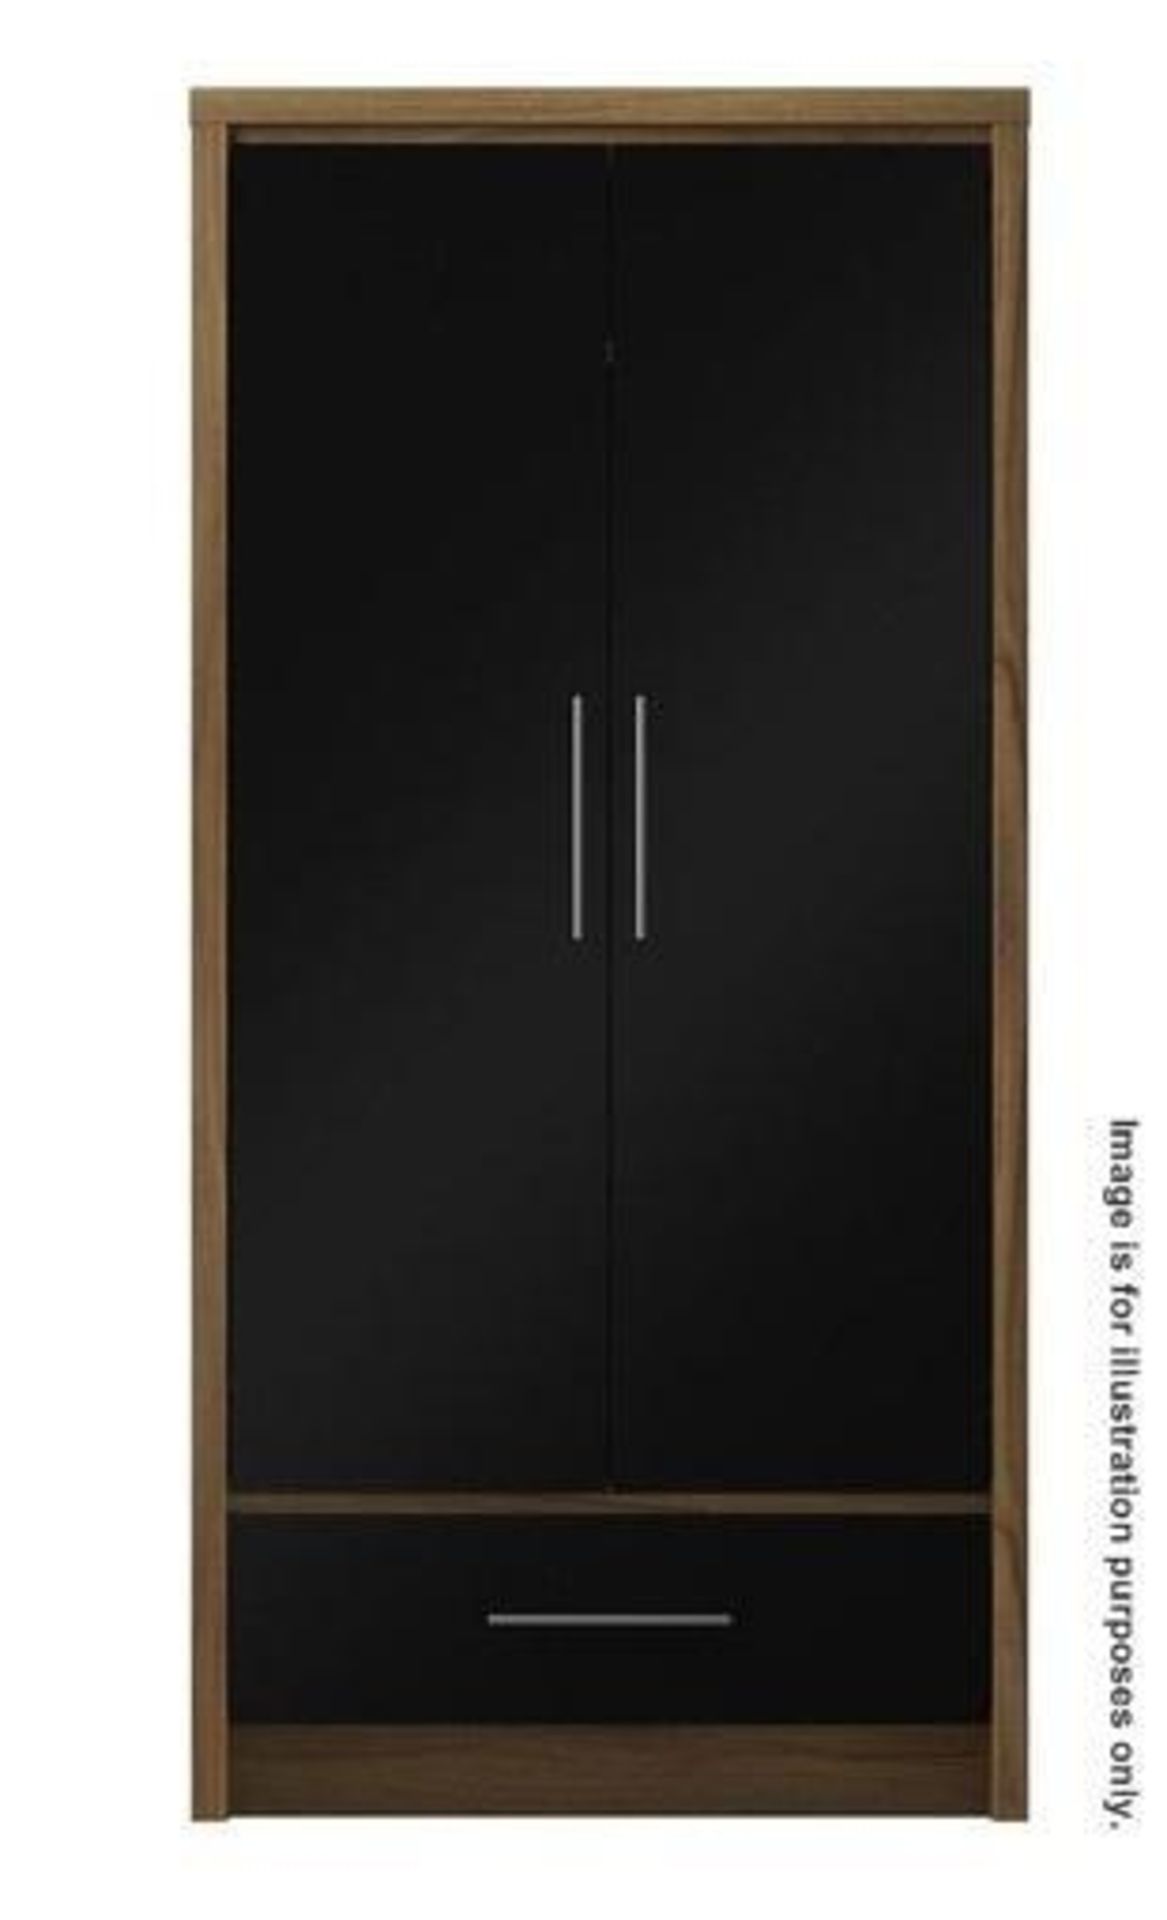 1 x LONDON Gents 2-Door, 1-Drawer Wardobe - Features A Walnut & Black Gloss Finish - Ref: DY145/WD18 - Image 7 of 7